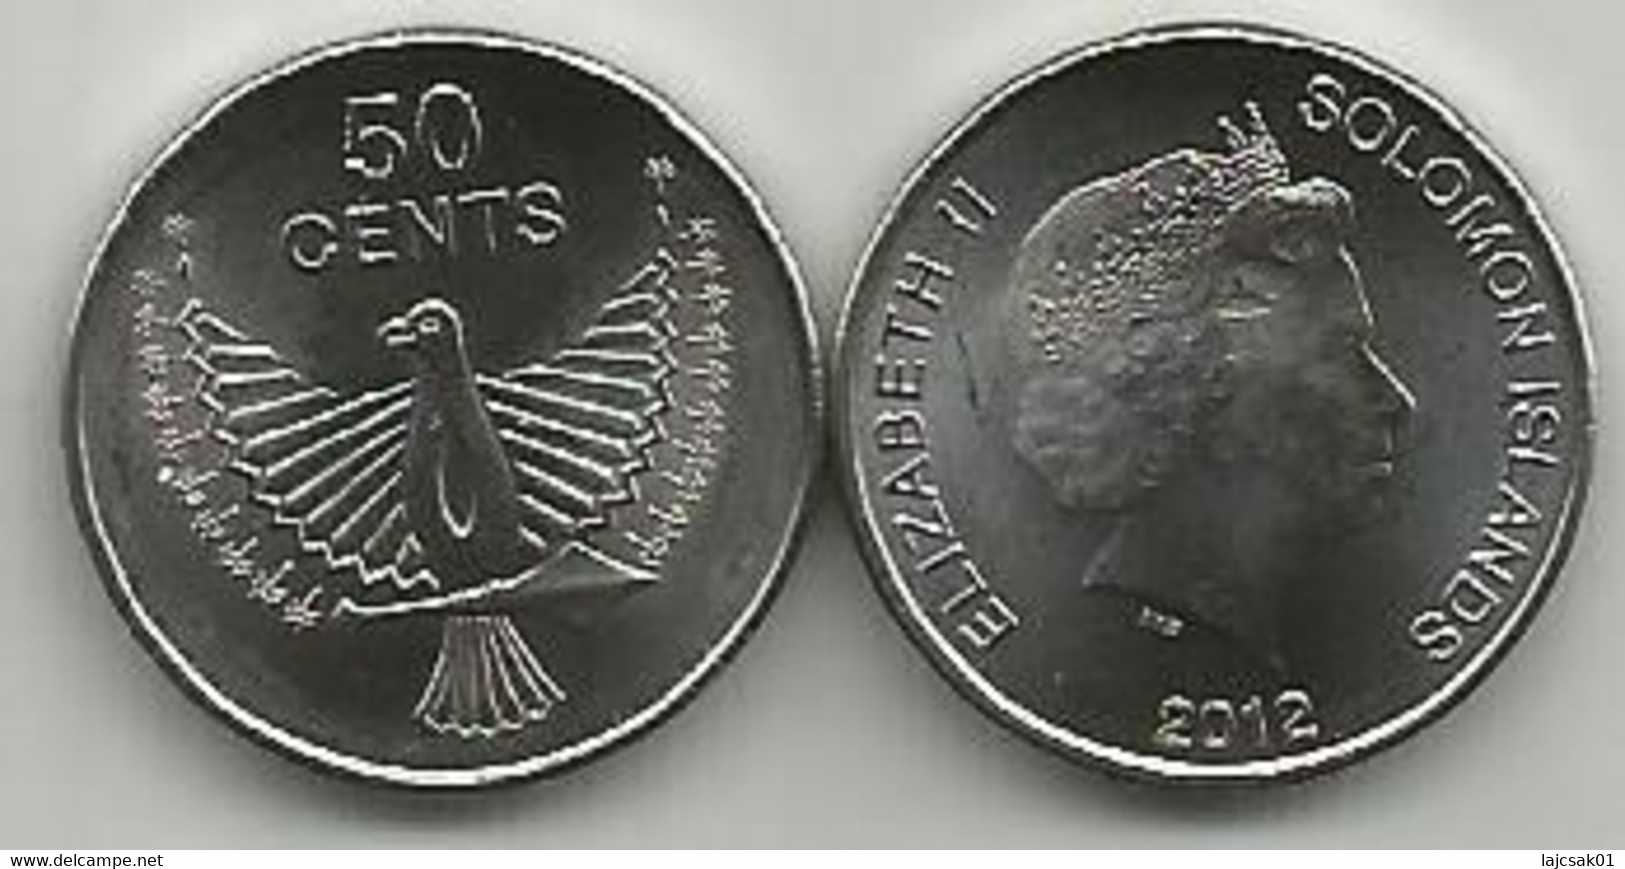 Solomon Islands 50 Cents 2012. High Grade - Salomon